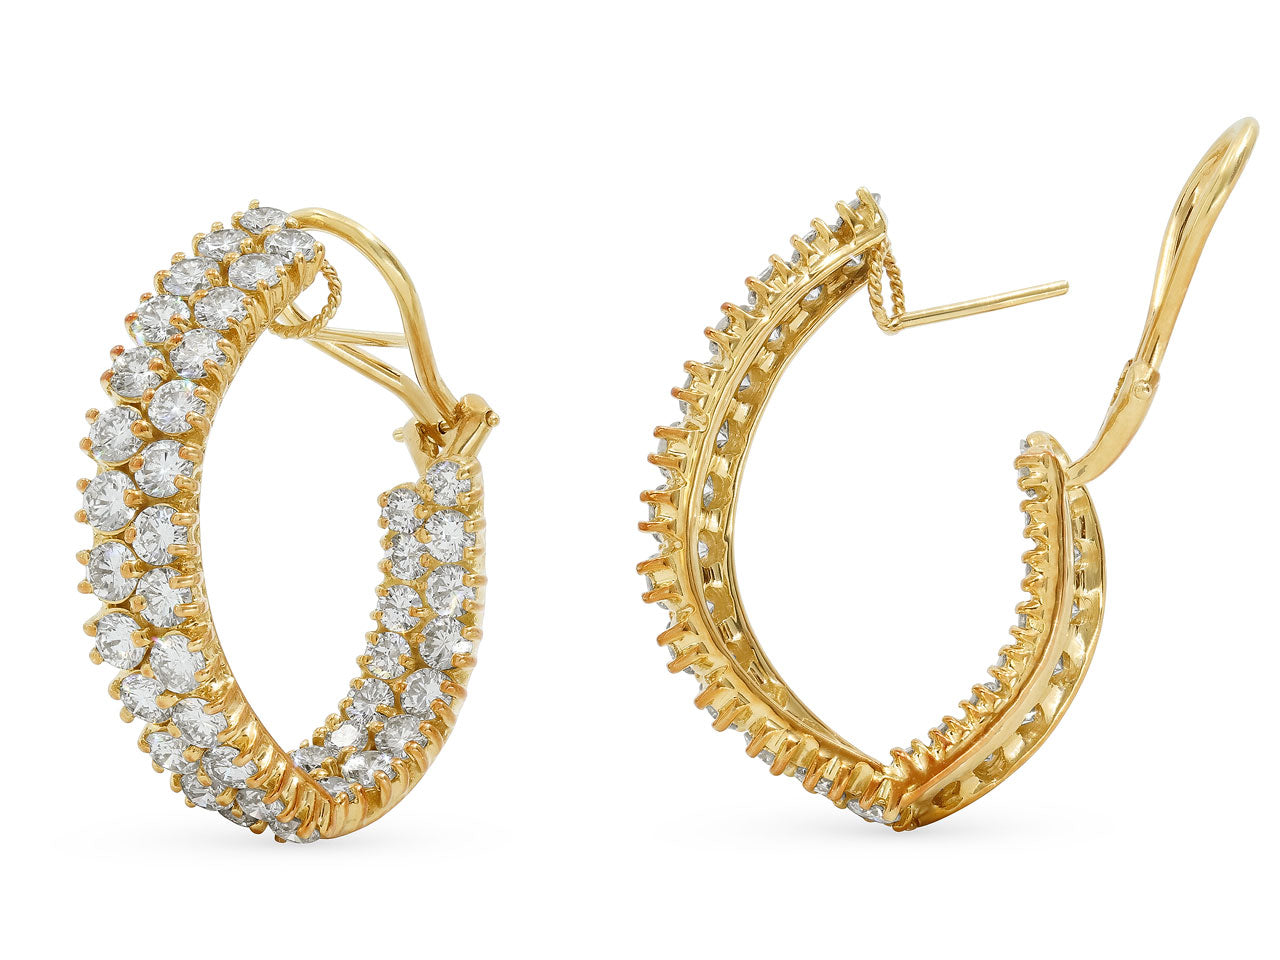 Diamond Hoop Earrings in 18K Gold